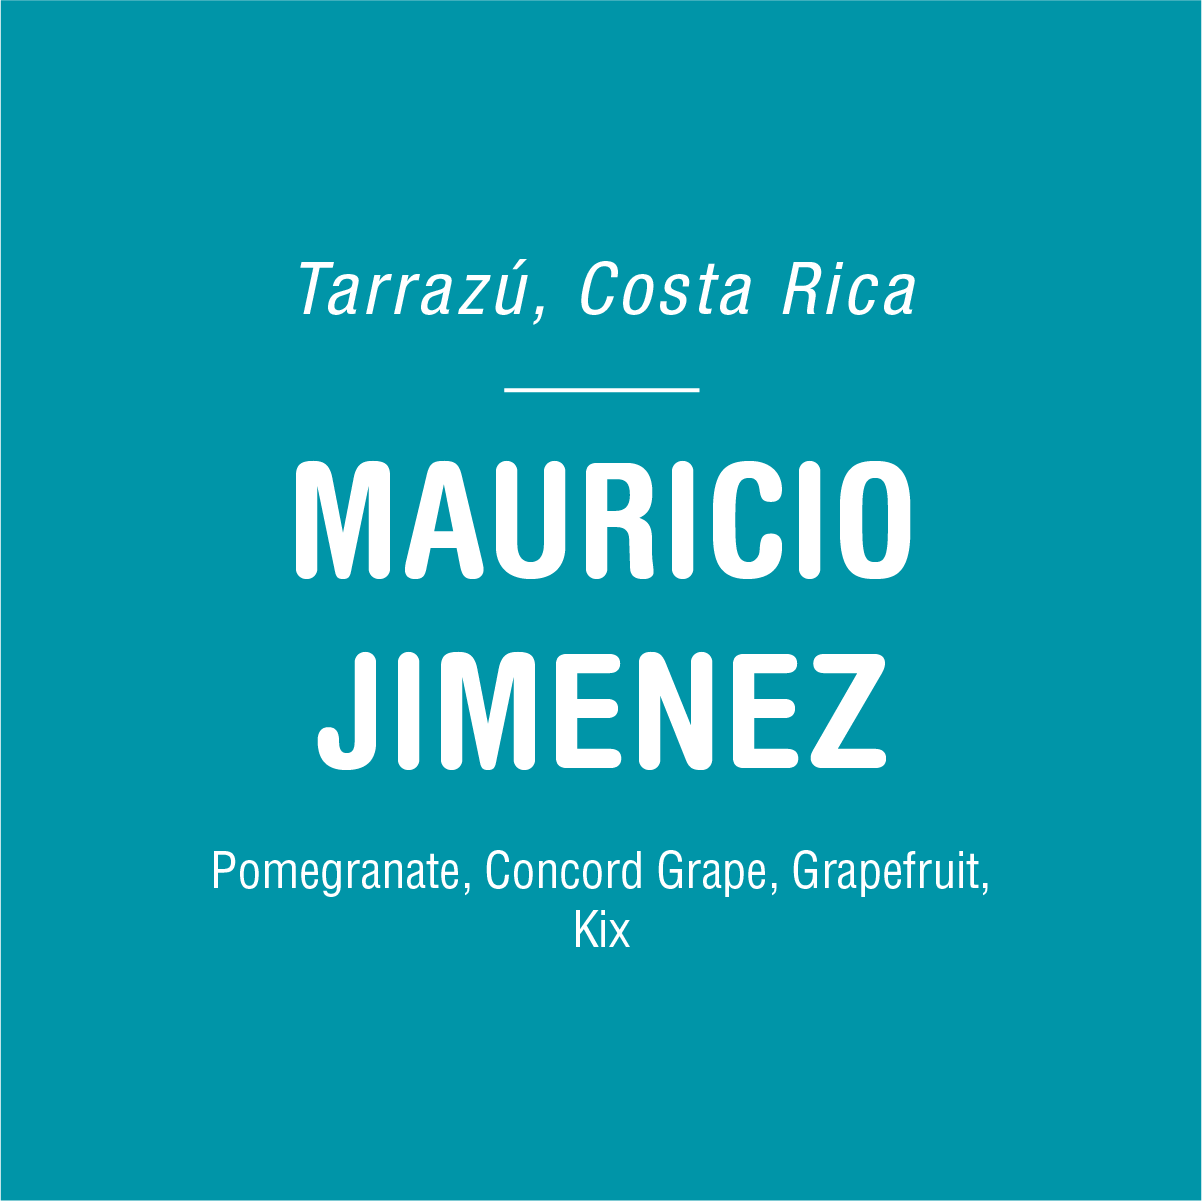 Mauricio Jimenez - Costa Rica